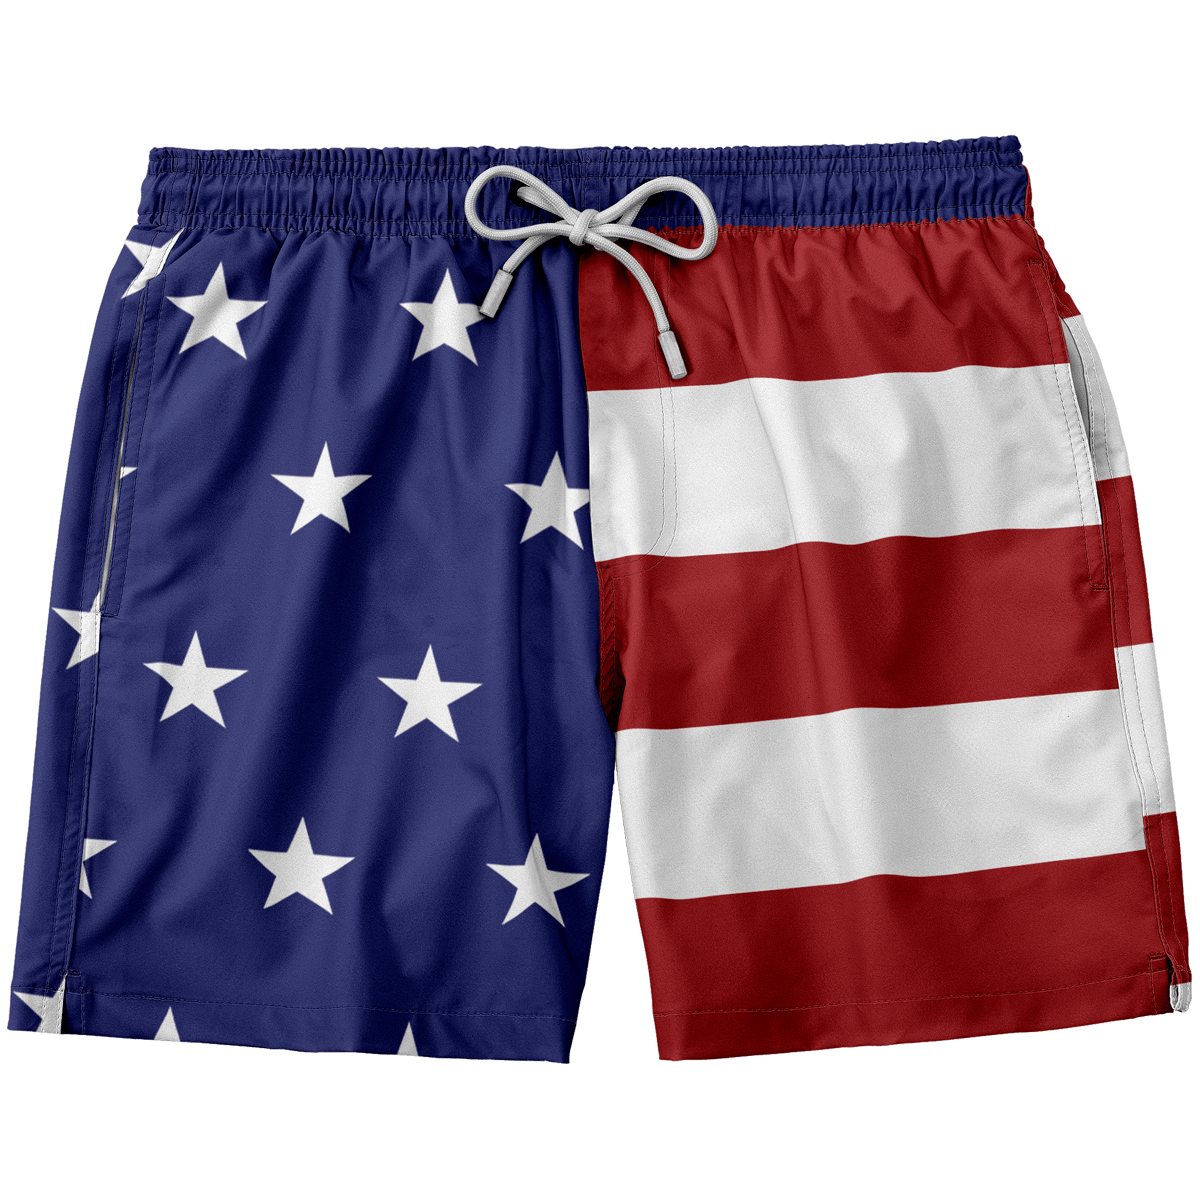 American Flag Swim Trunks - Greater Half